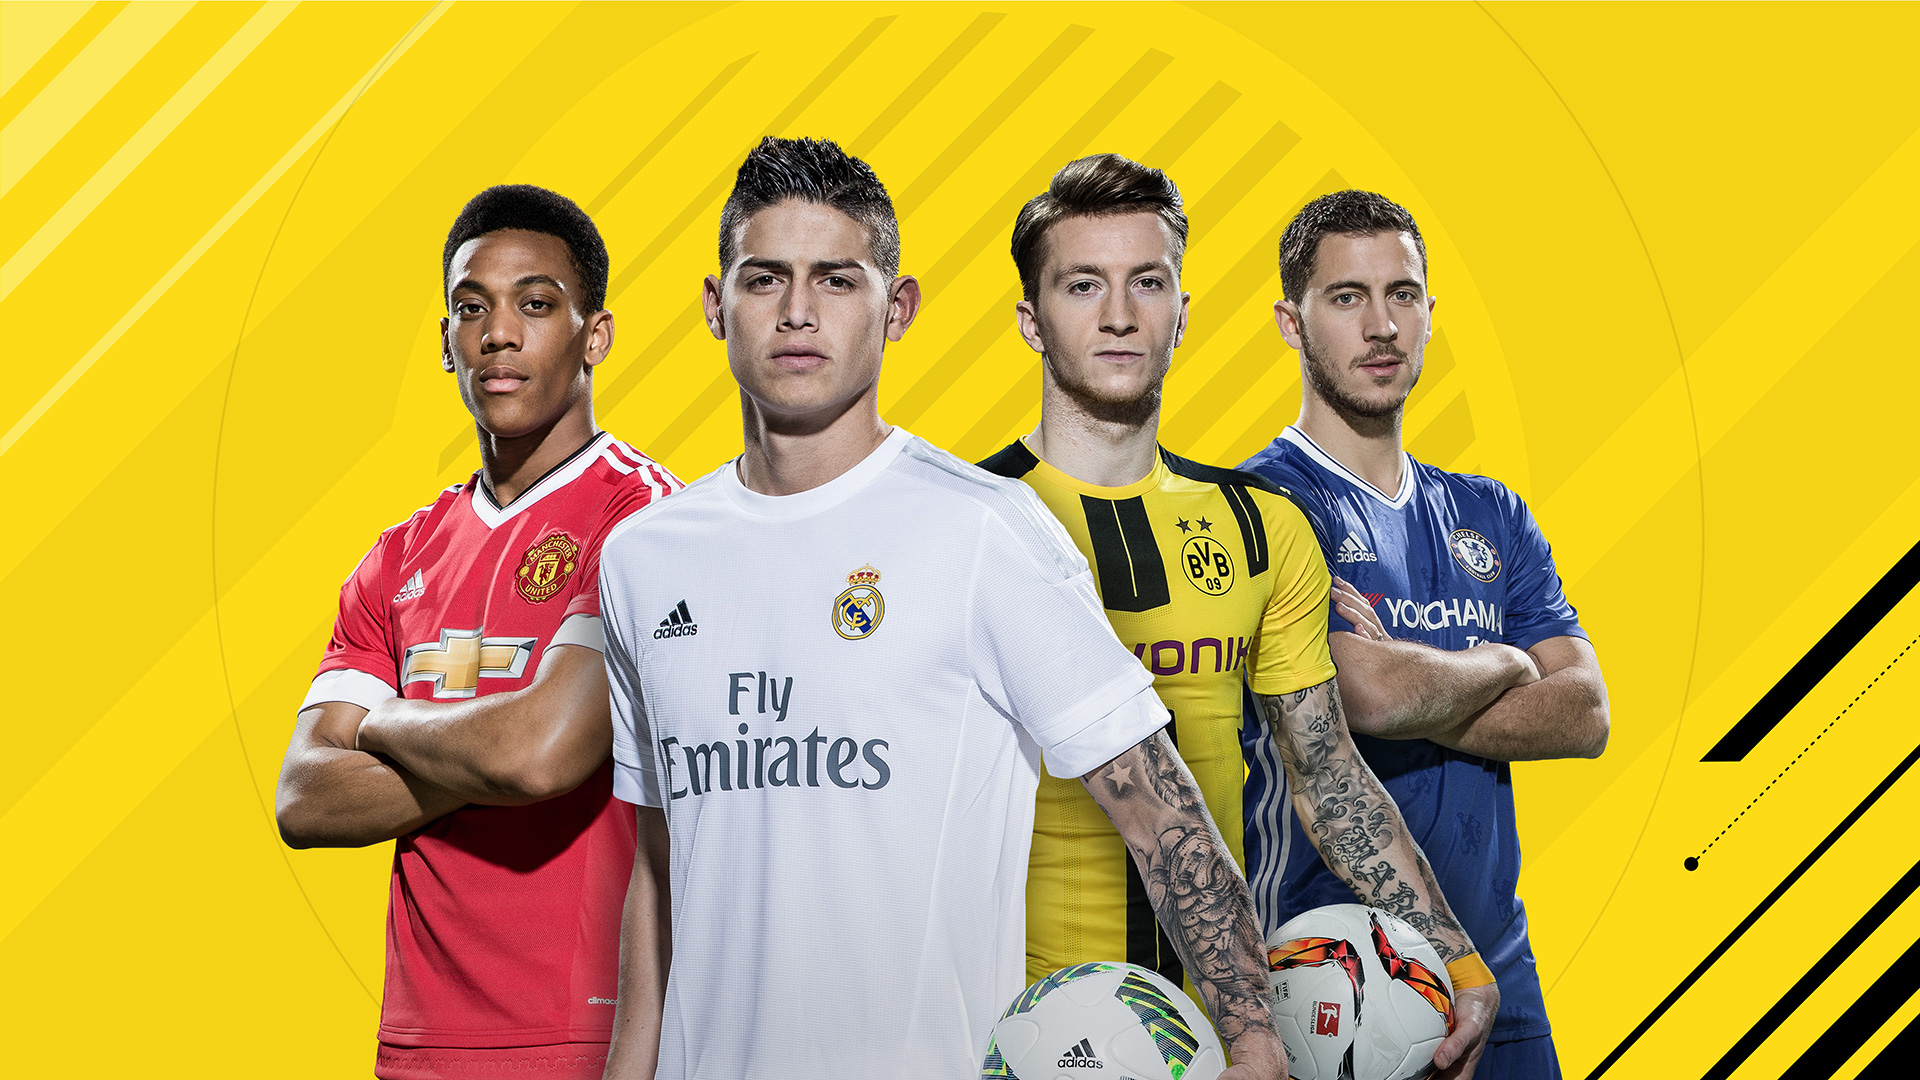 fifa 17 wallpaper,team,product,yellow,player,team sport